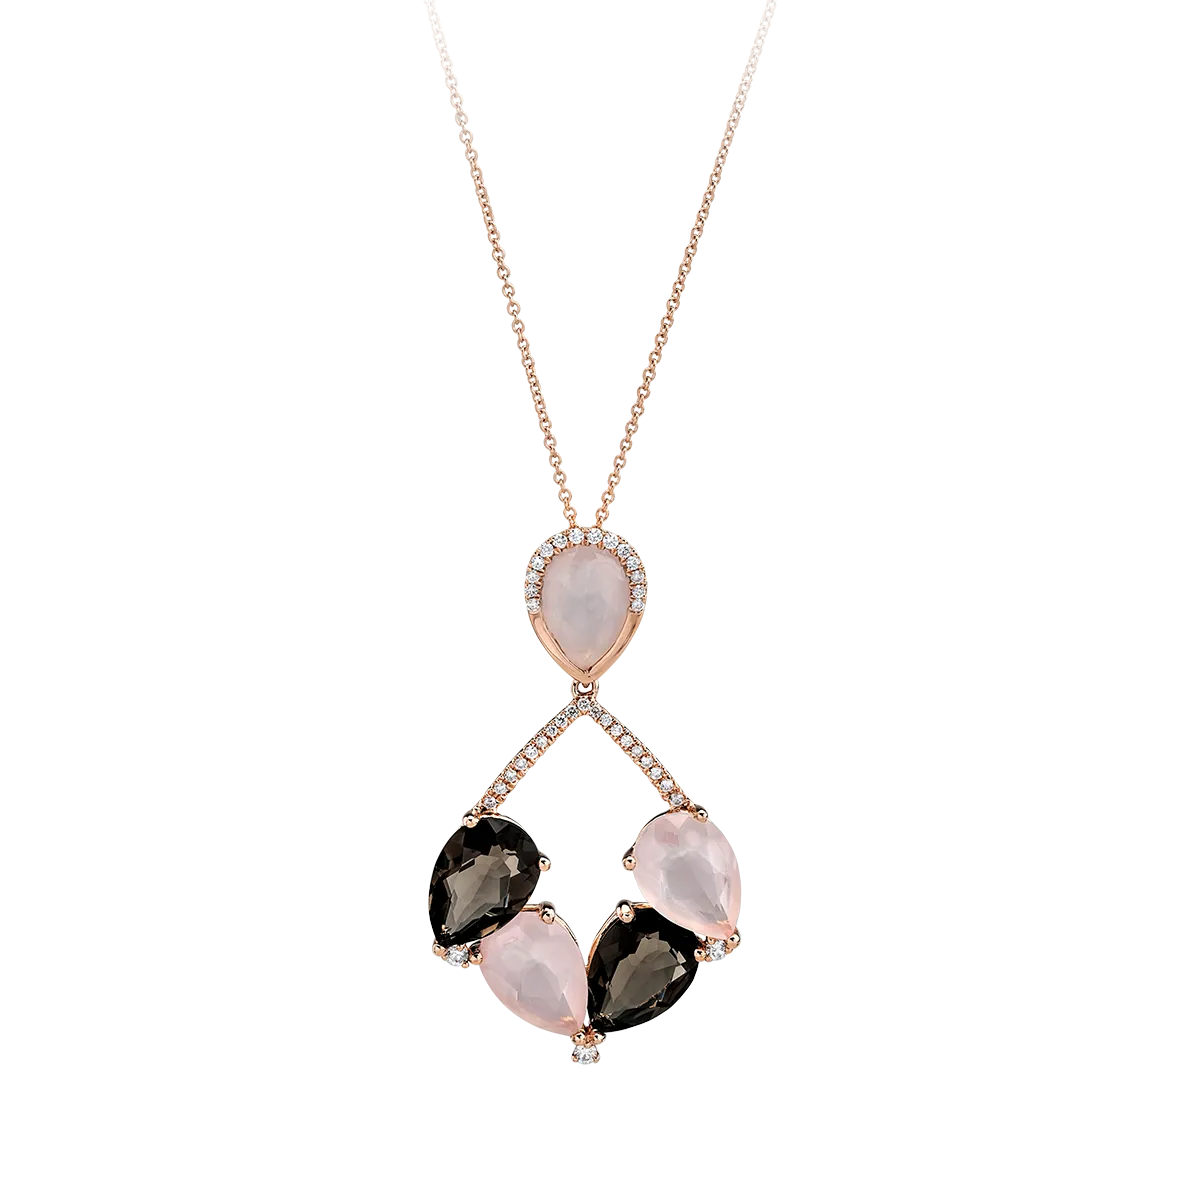 18K rose gold pendant necklace with 7.14ct quartz and 0.191ct diamonds